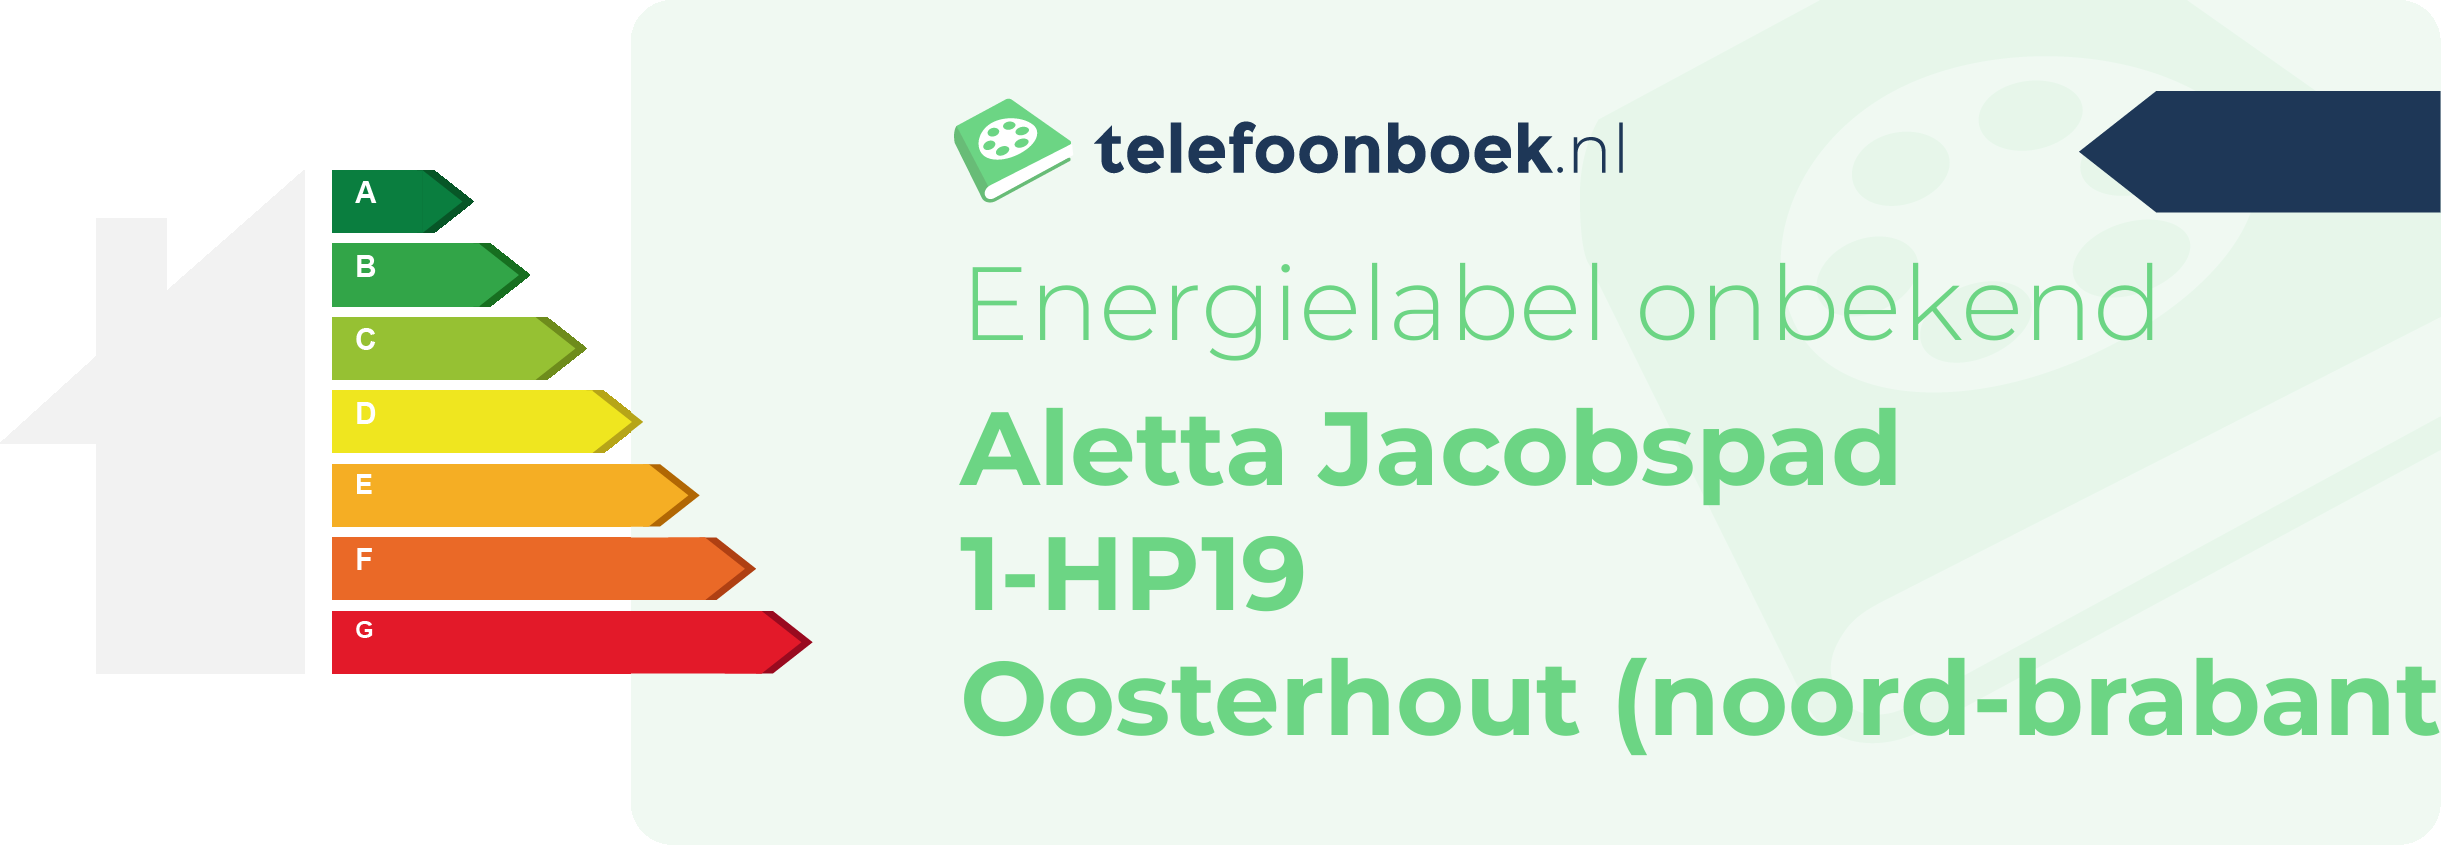 Energielabel Aletta Jacobspad 1-HP19 Oosterhout (Noord-Brabant)